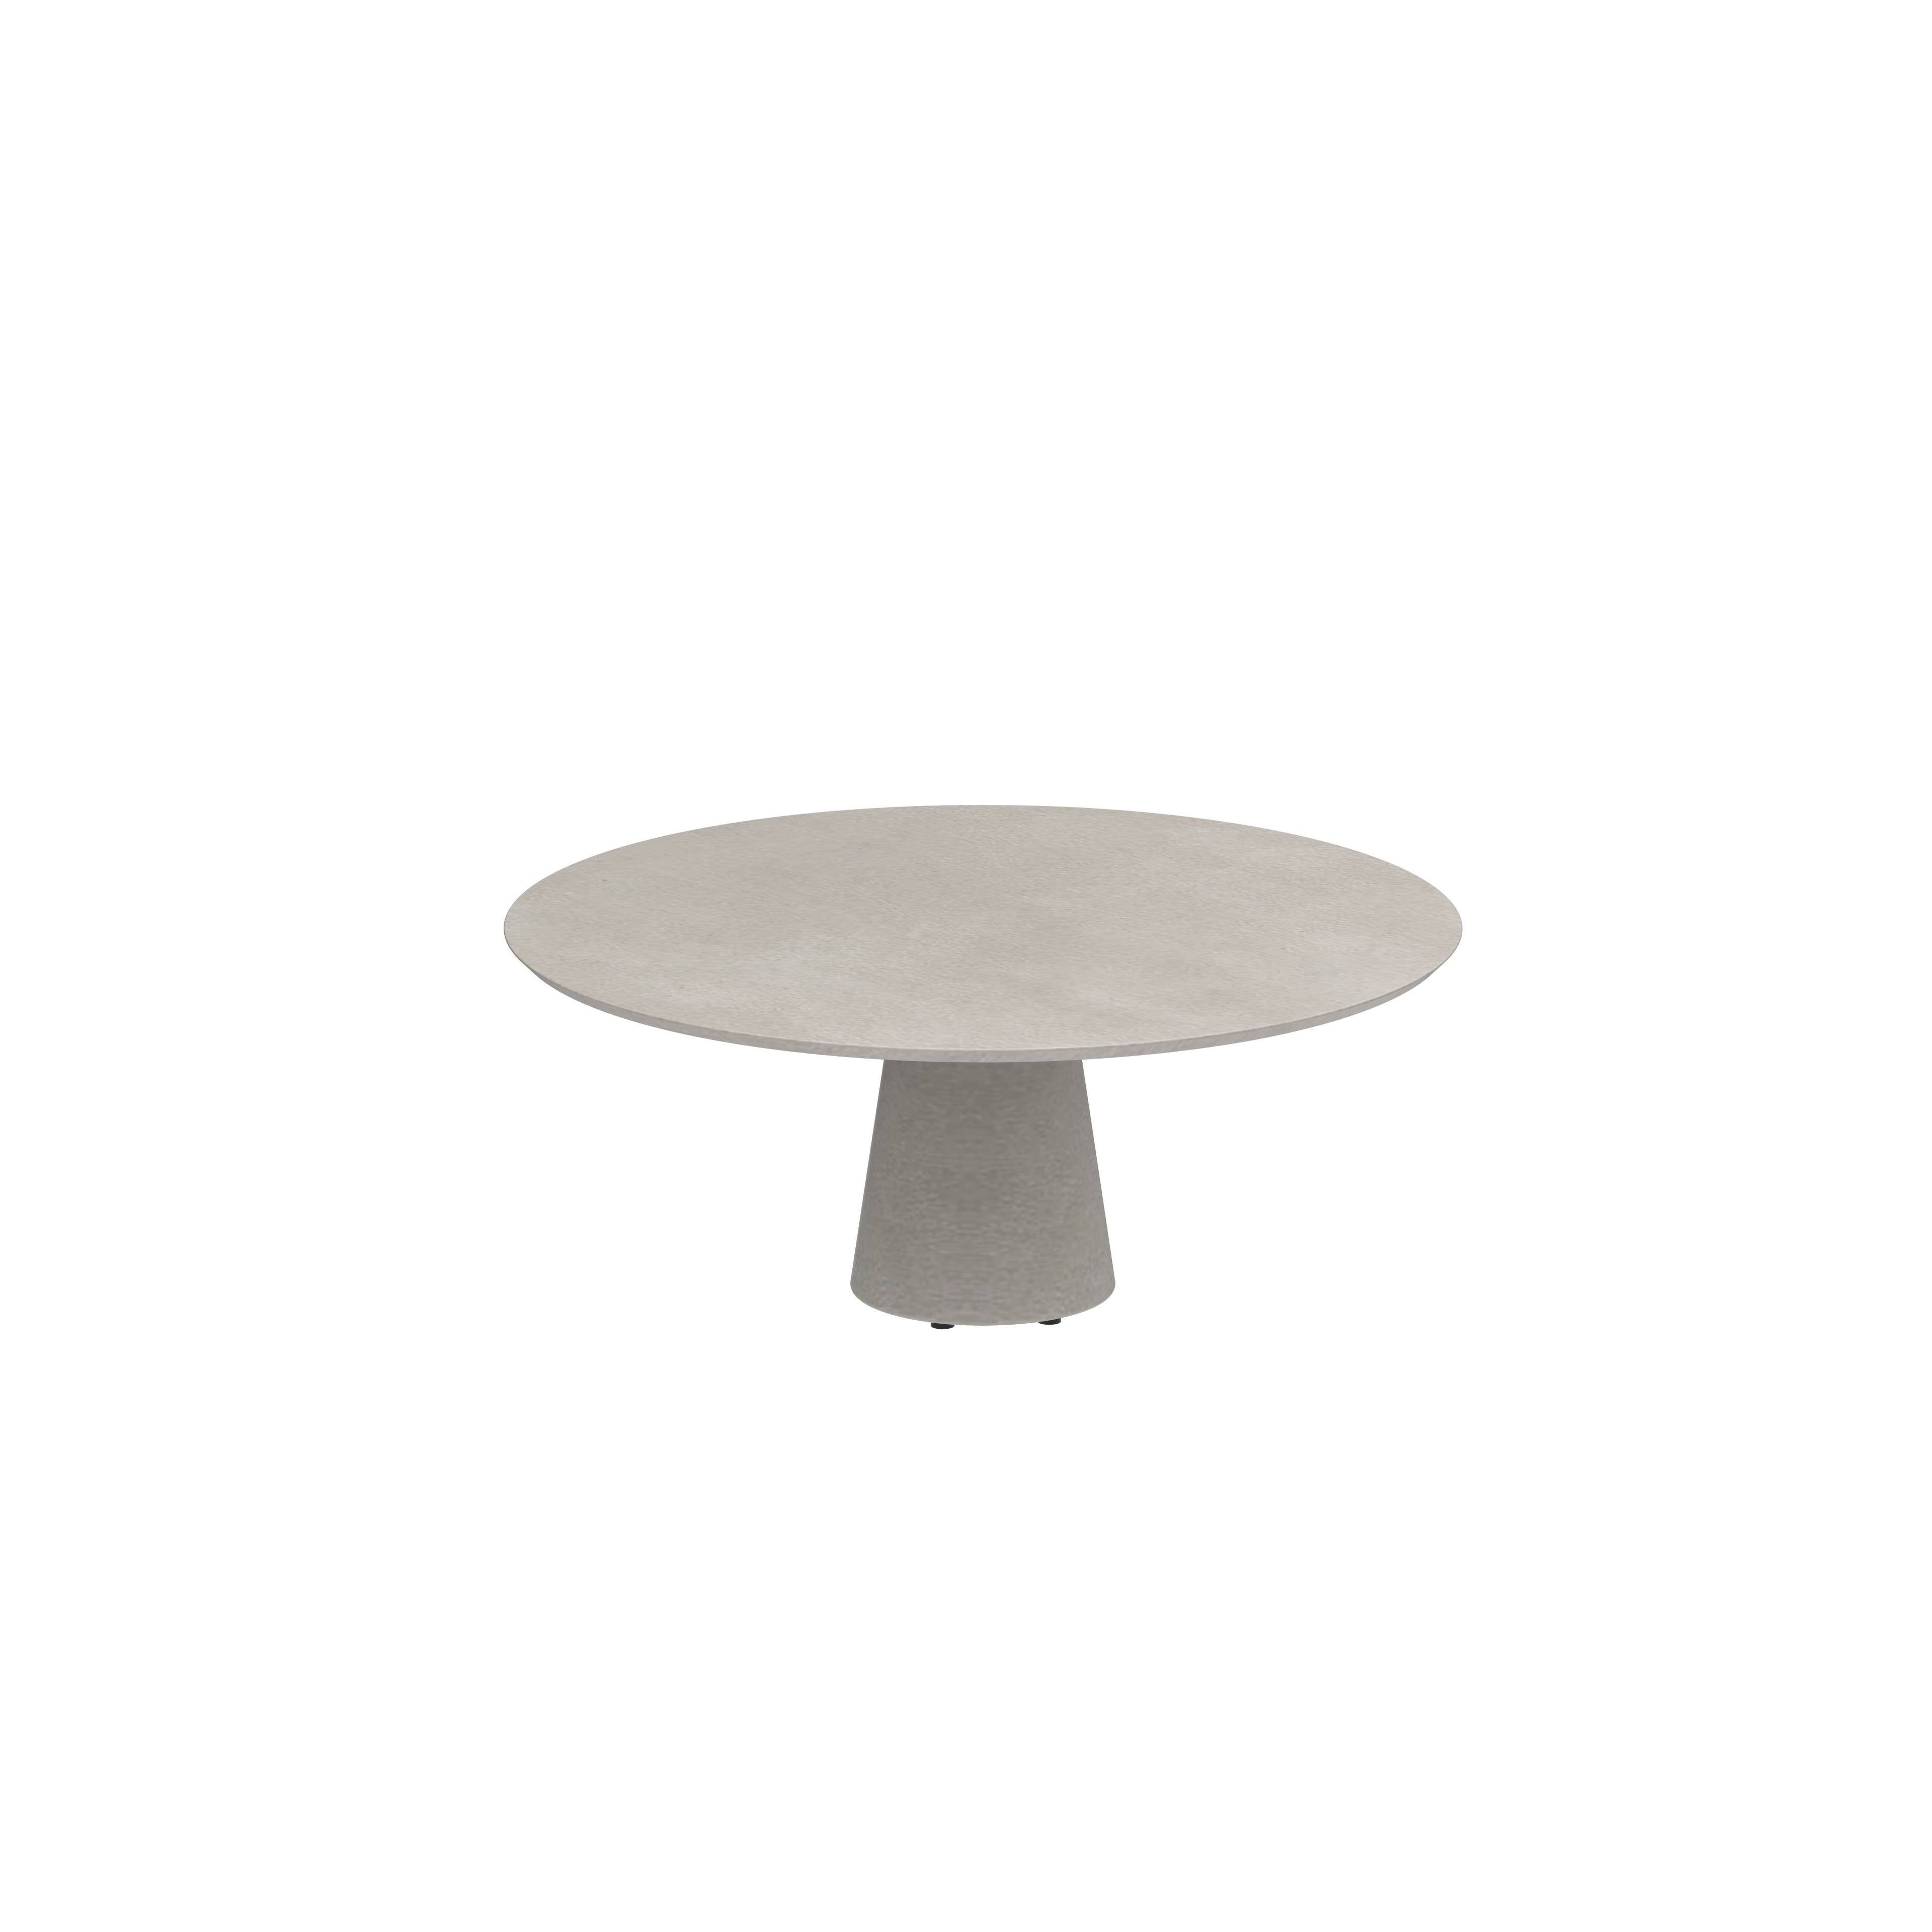 Conix Table Round Ø 160cm Low Dining Leg Concrete Cement Grey - Tabletop Concrete Cement Grey